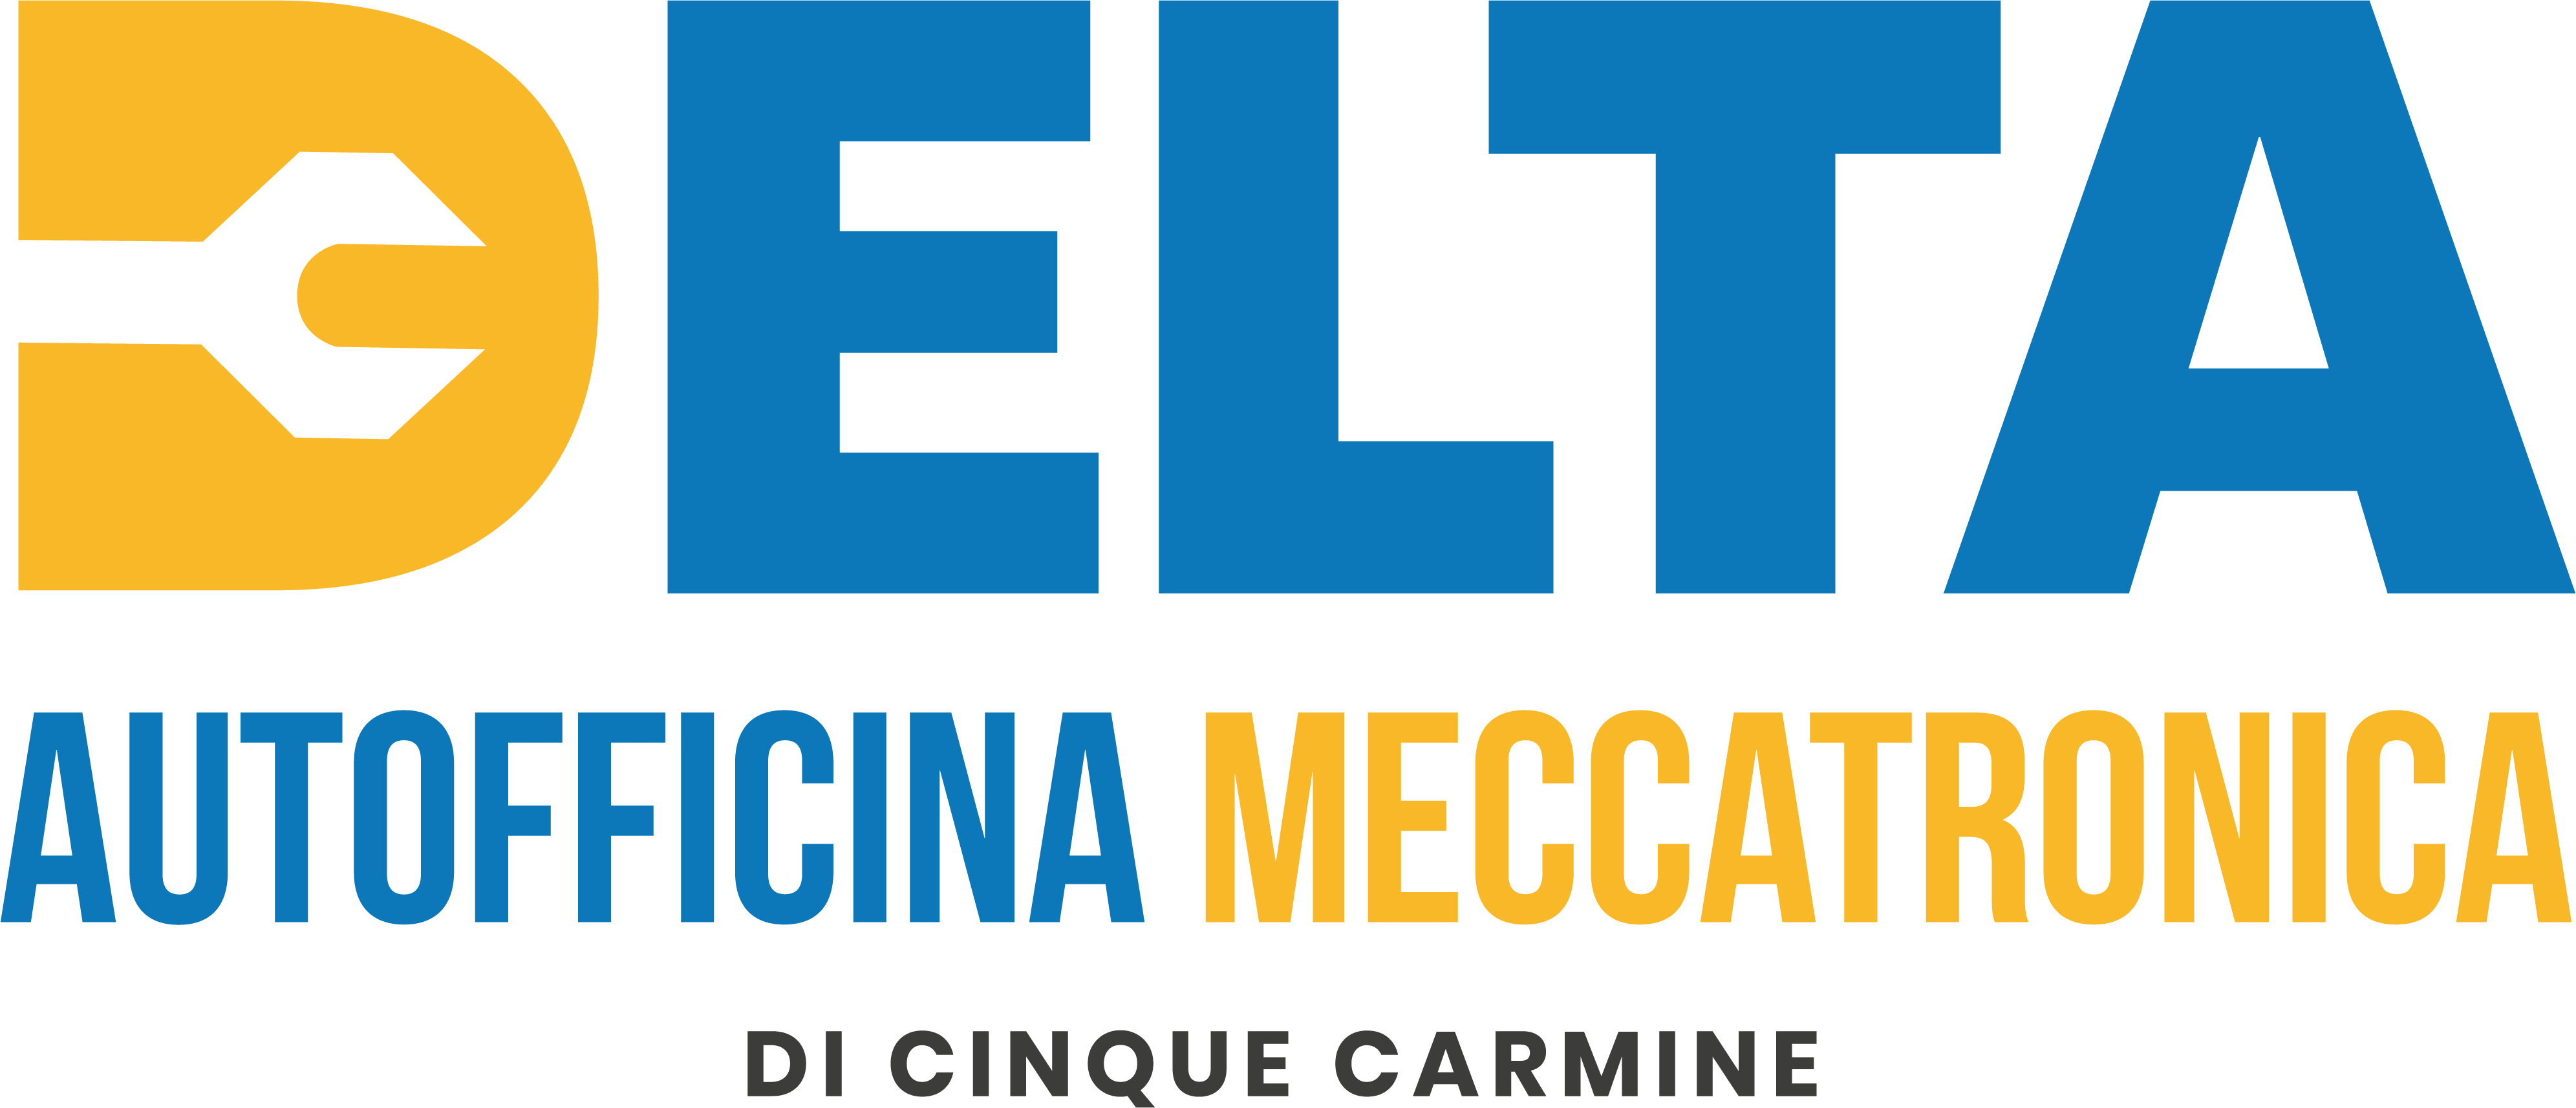 Autofficina Meccatronica Delta